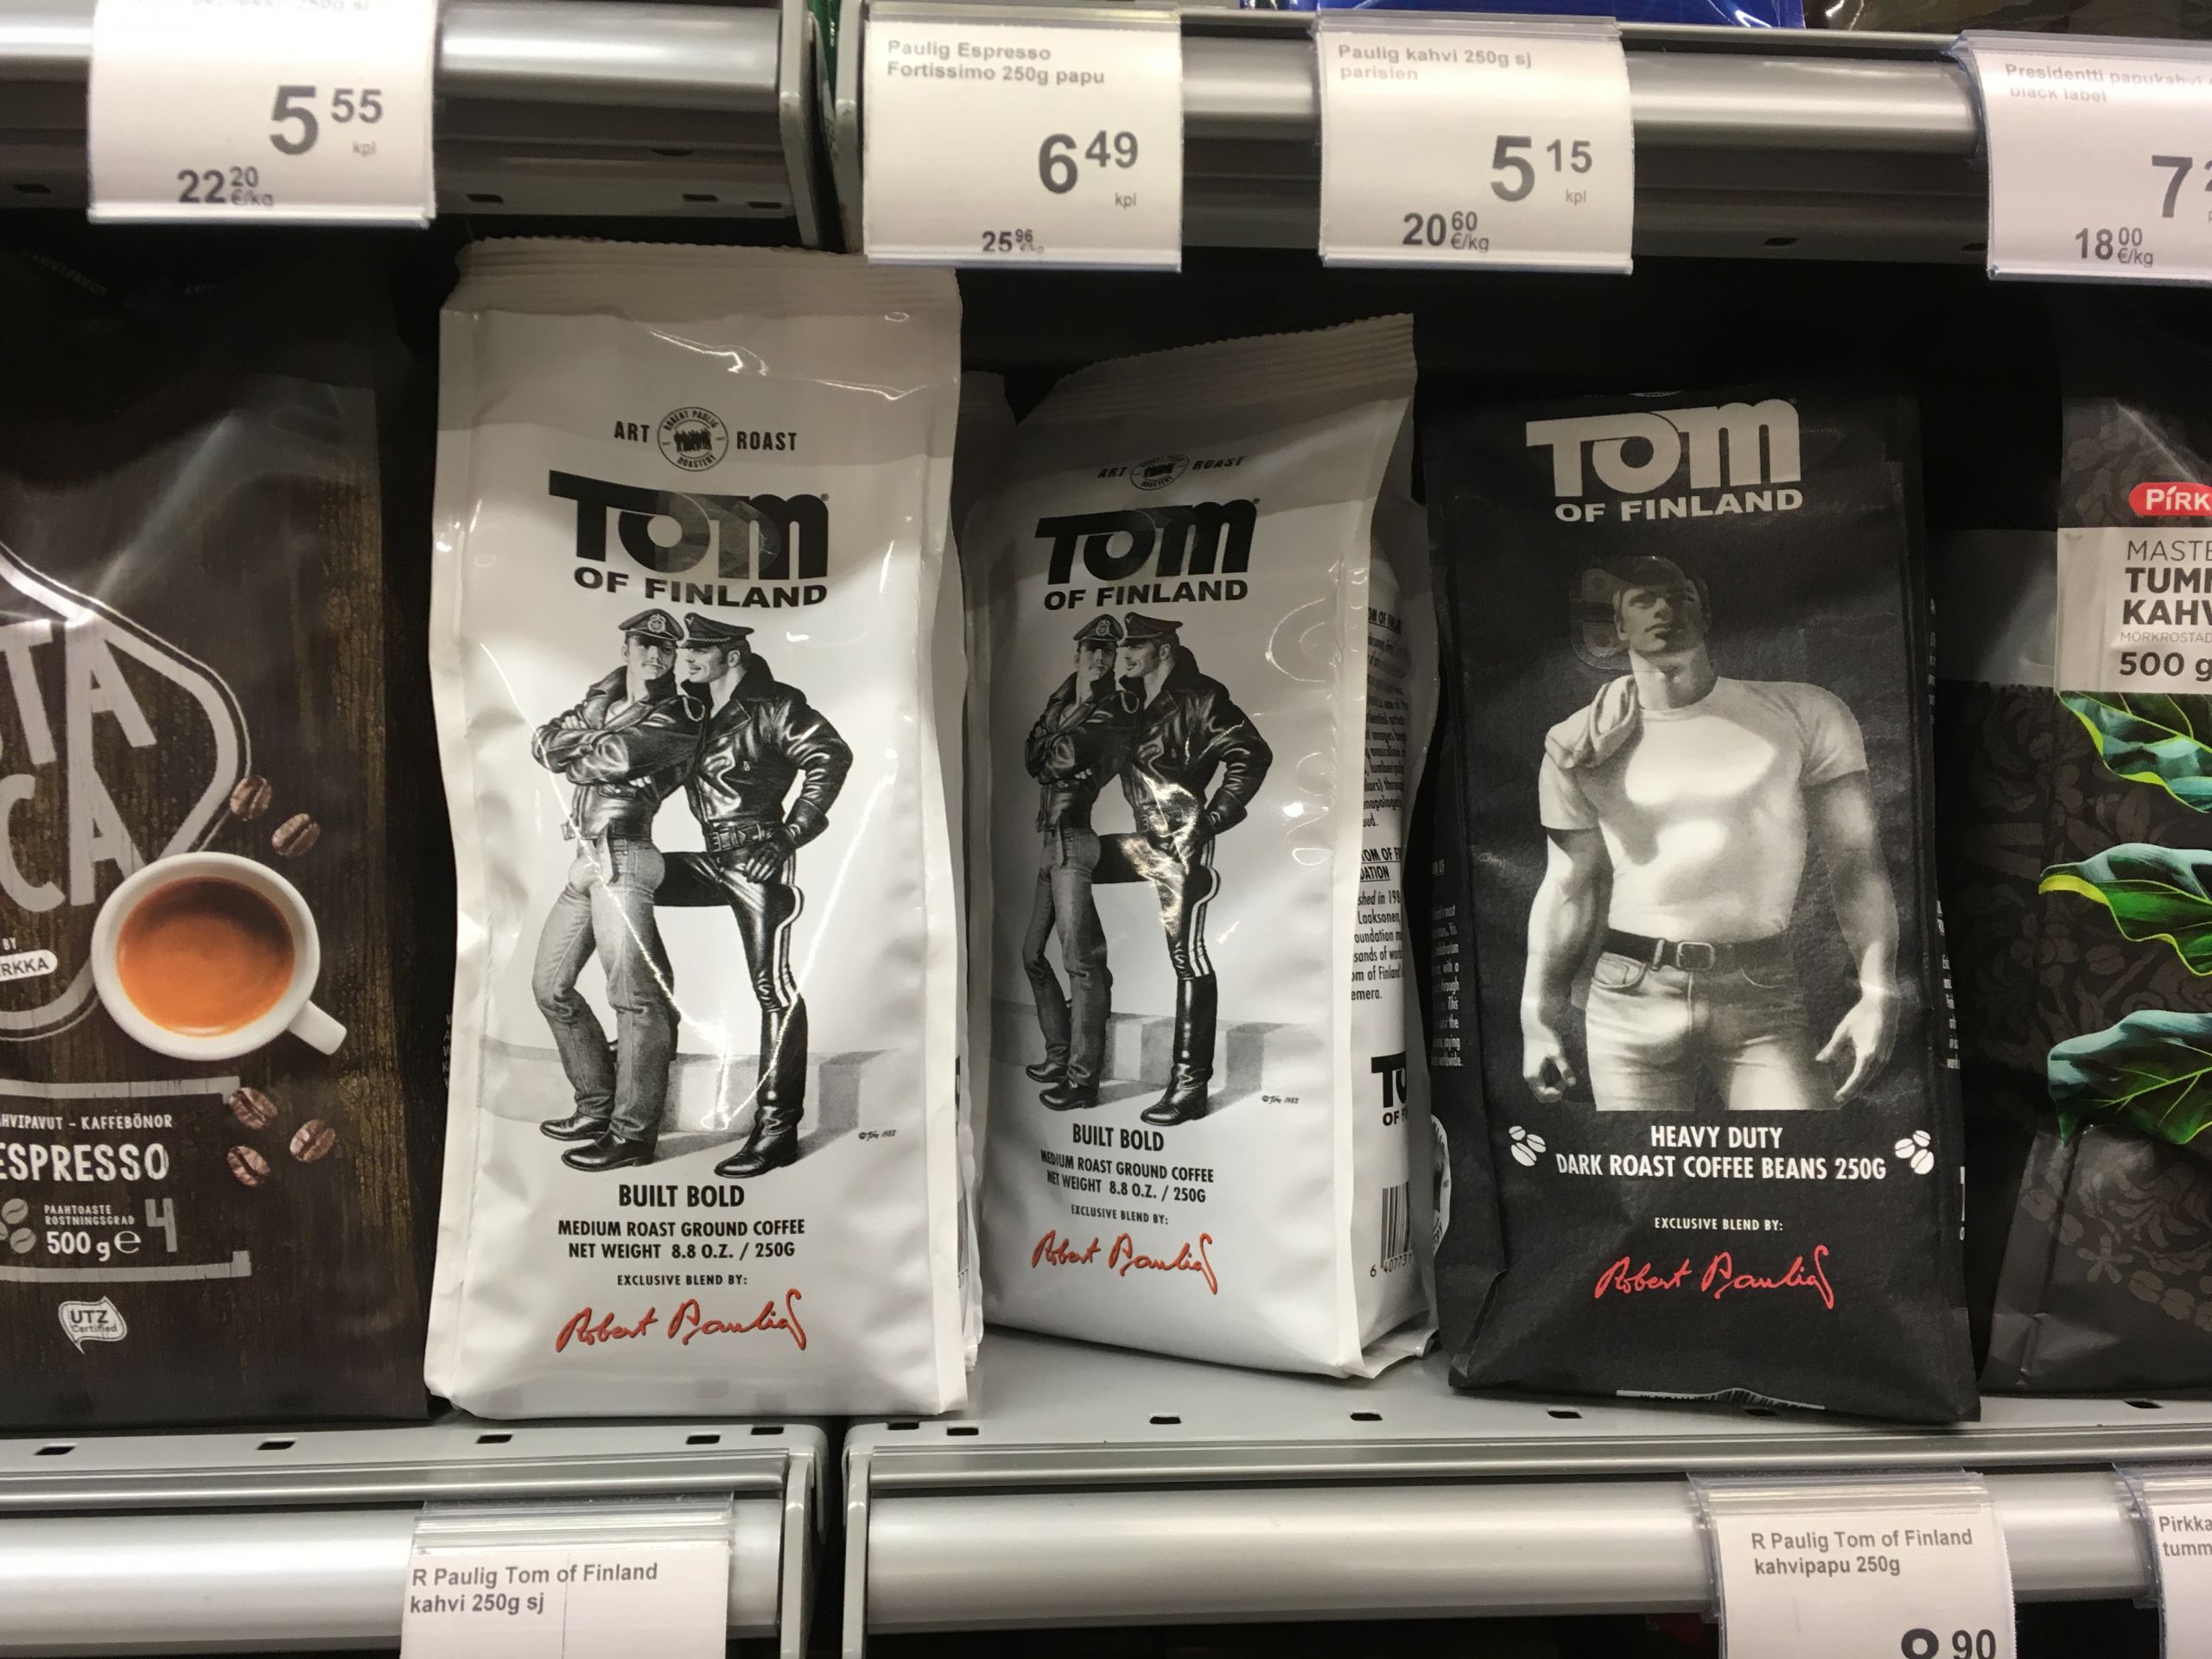 Tom of Finland coffee %